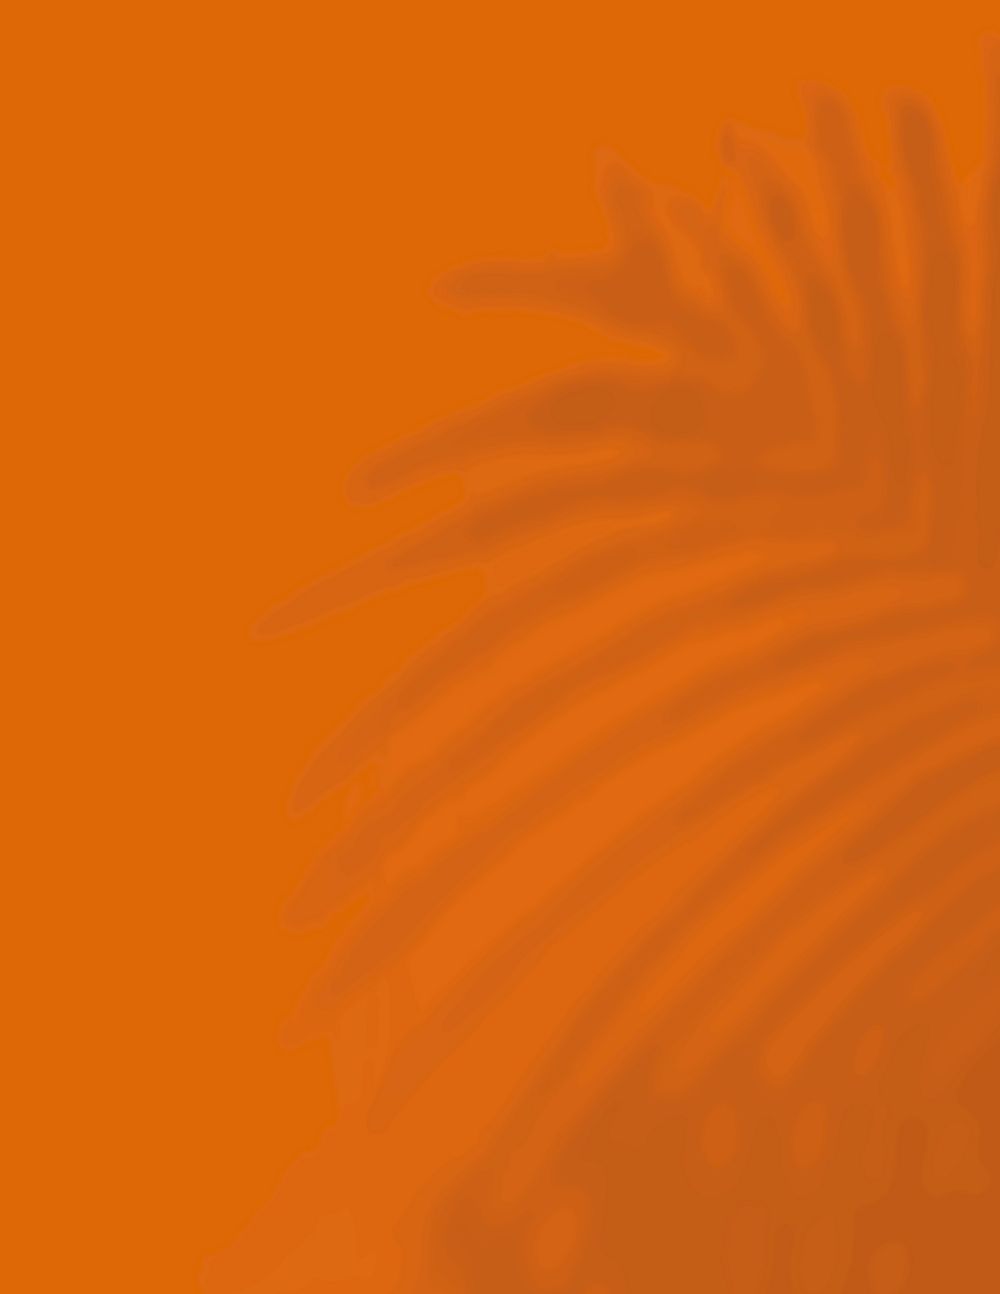 Burnt orange background, palm leaf shadow design